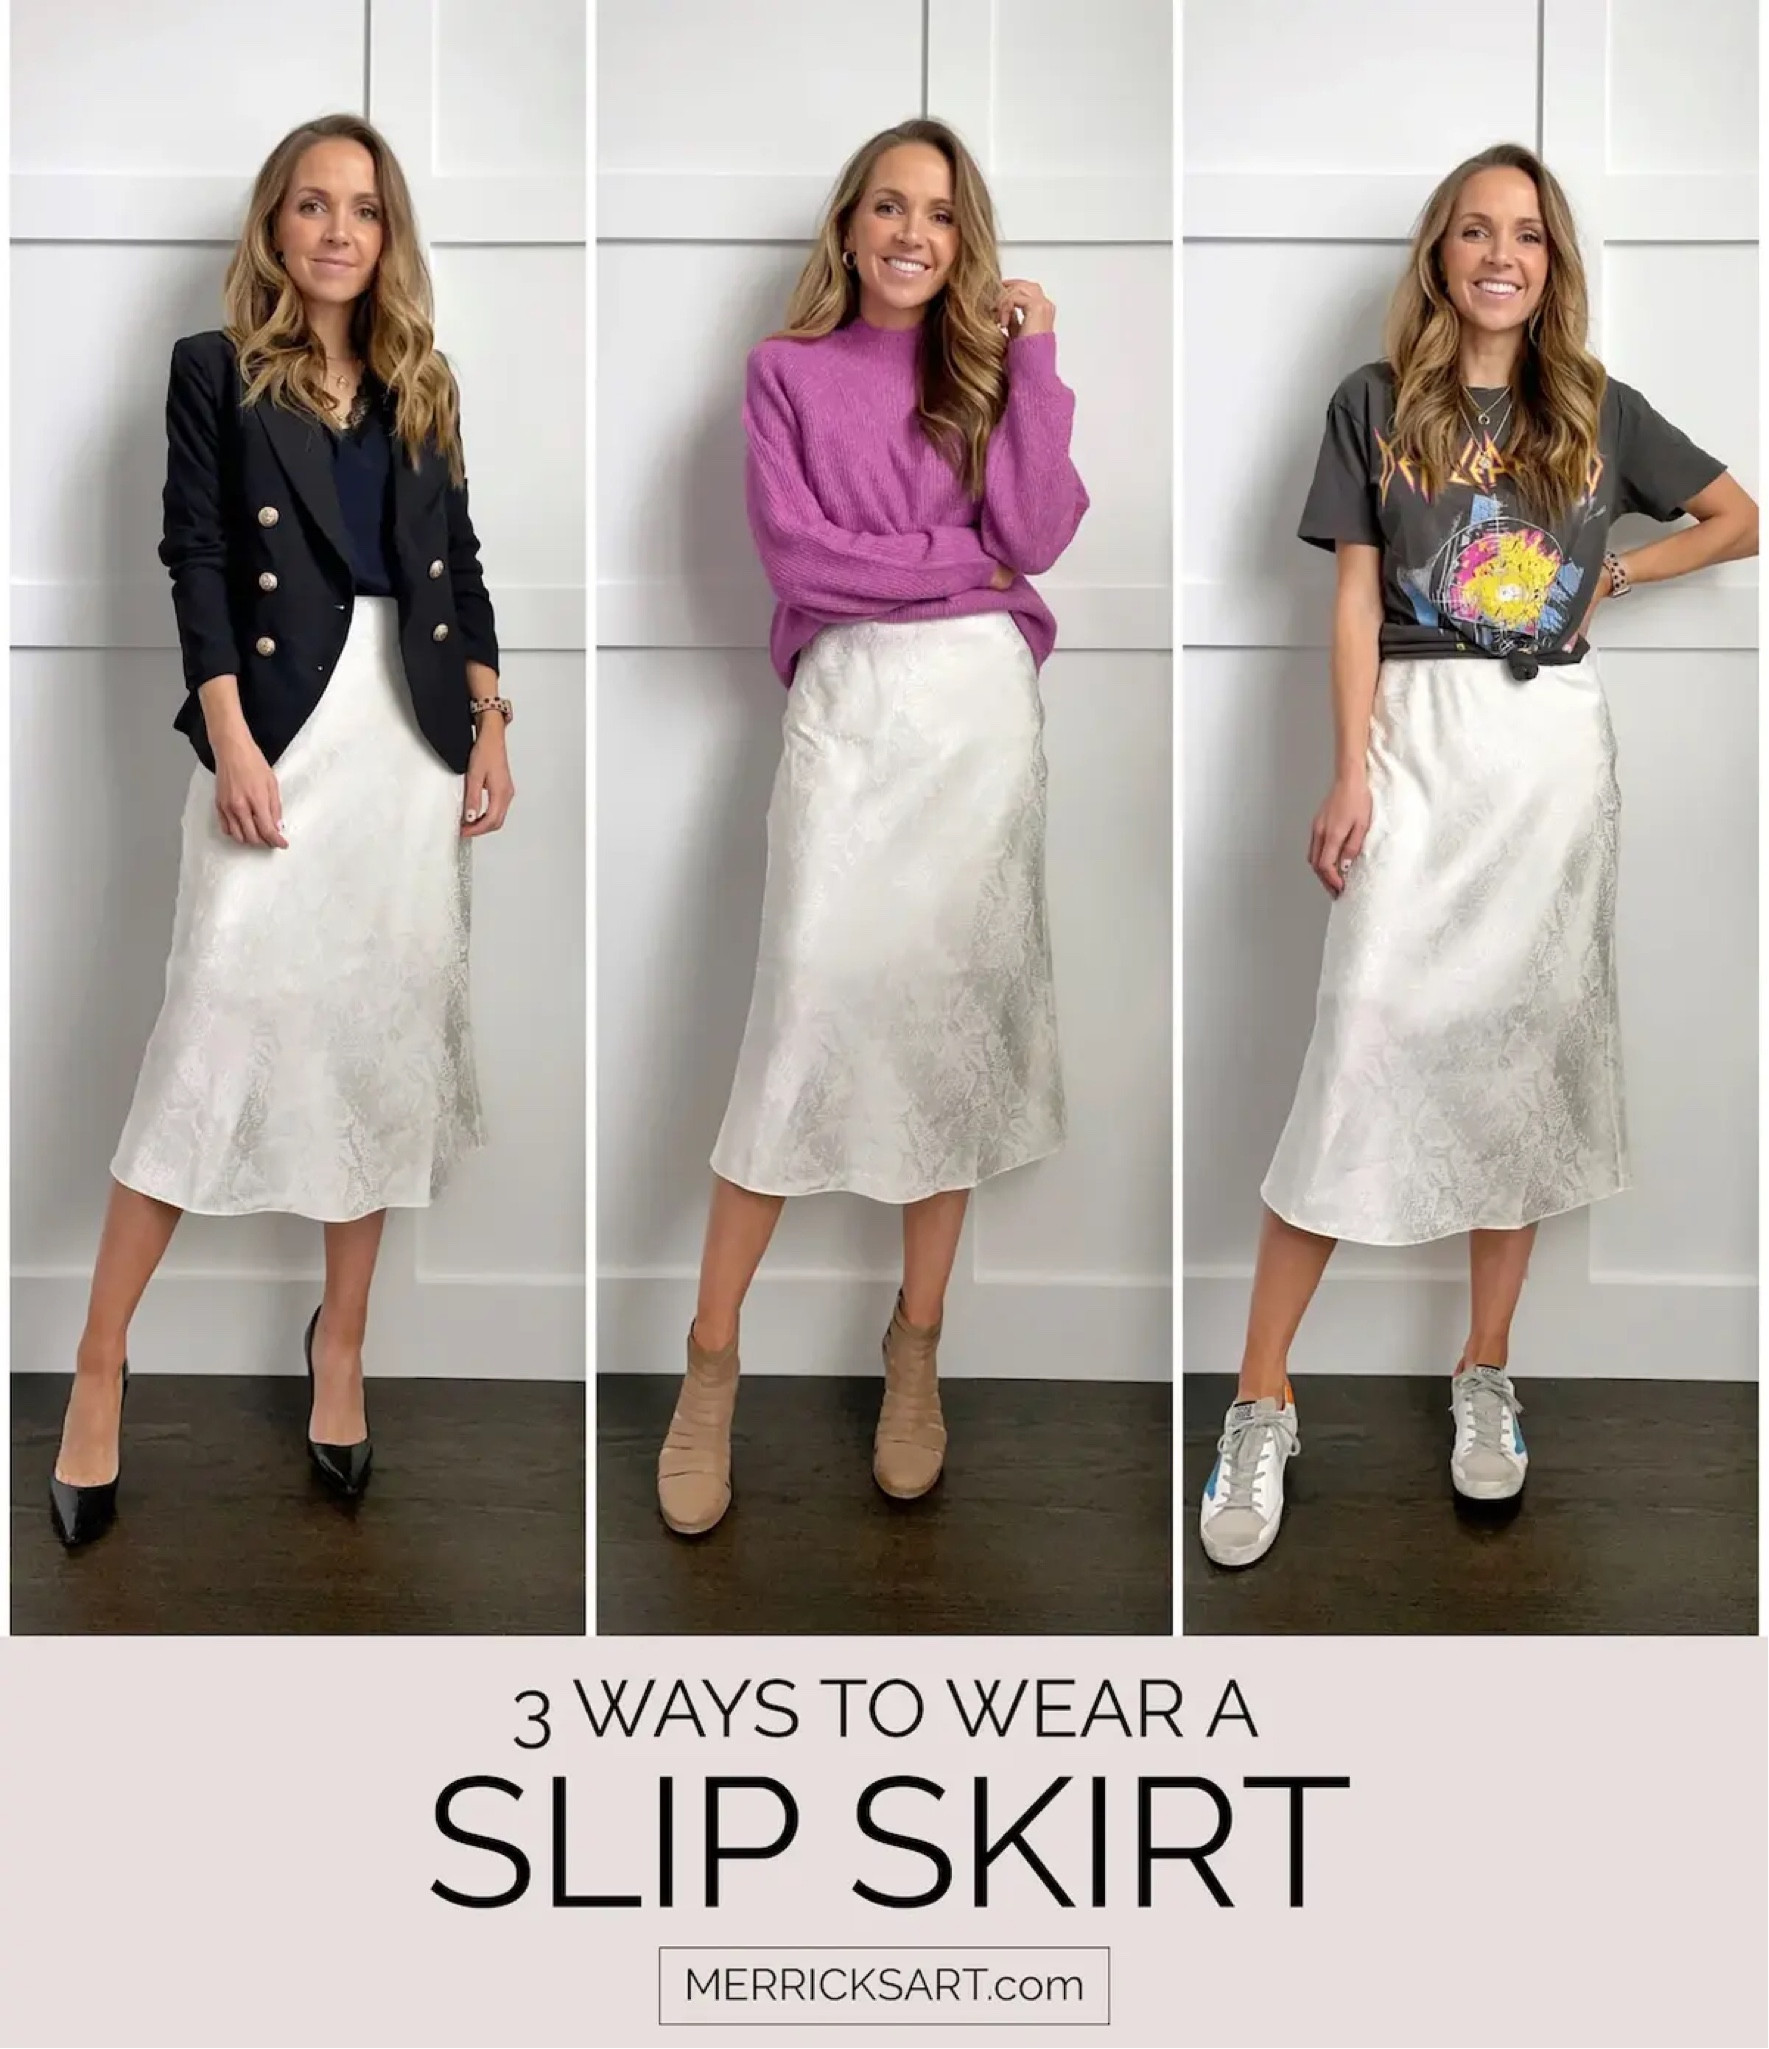 The Drop Women's Maya Silky Slip Skirt Skirt, Black, XXS 